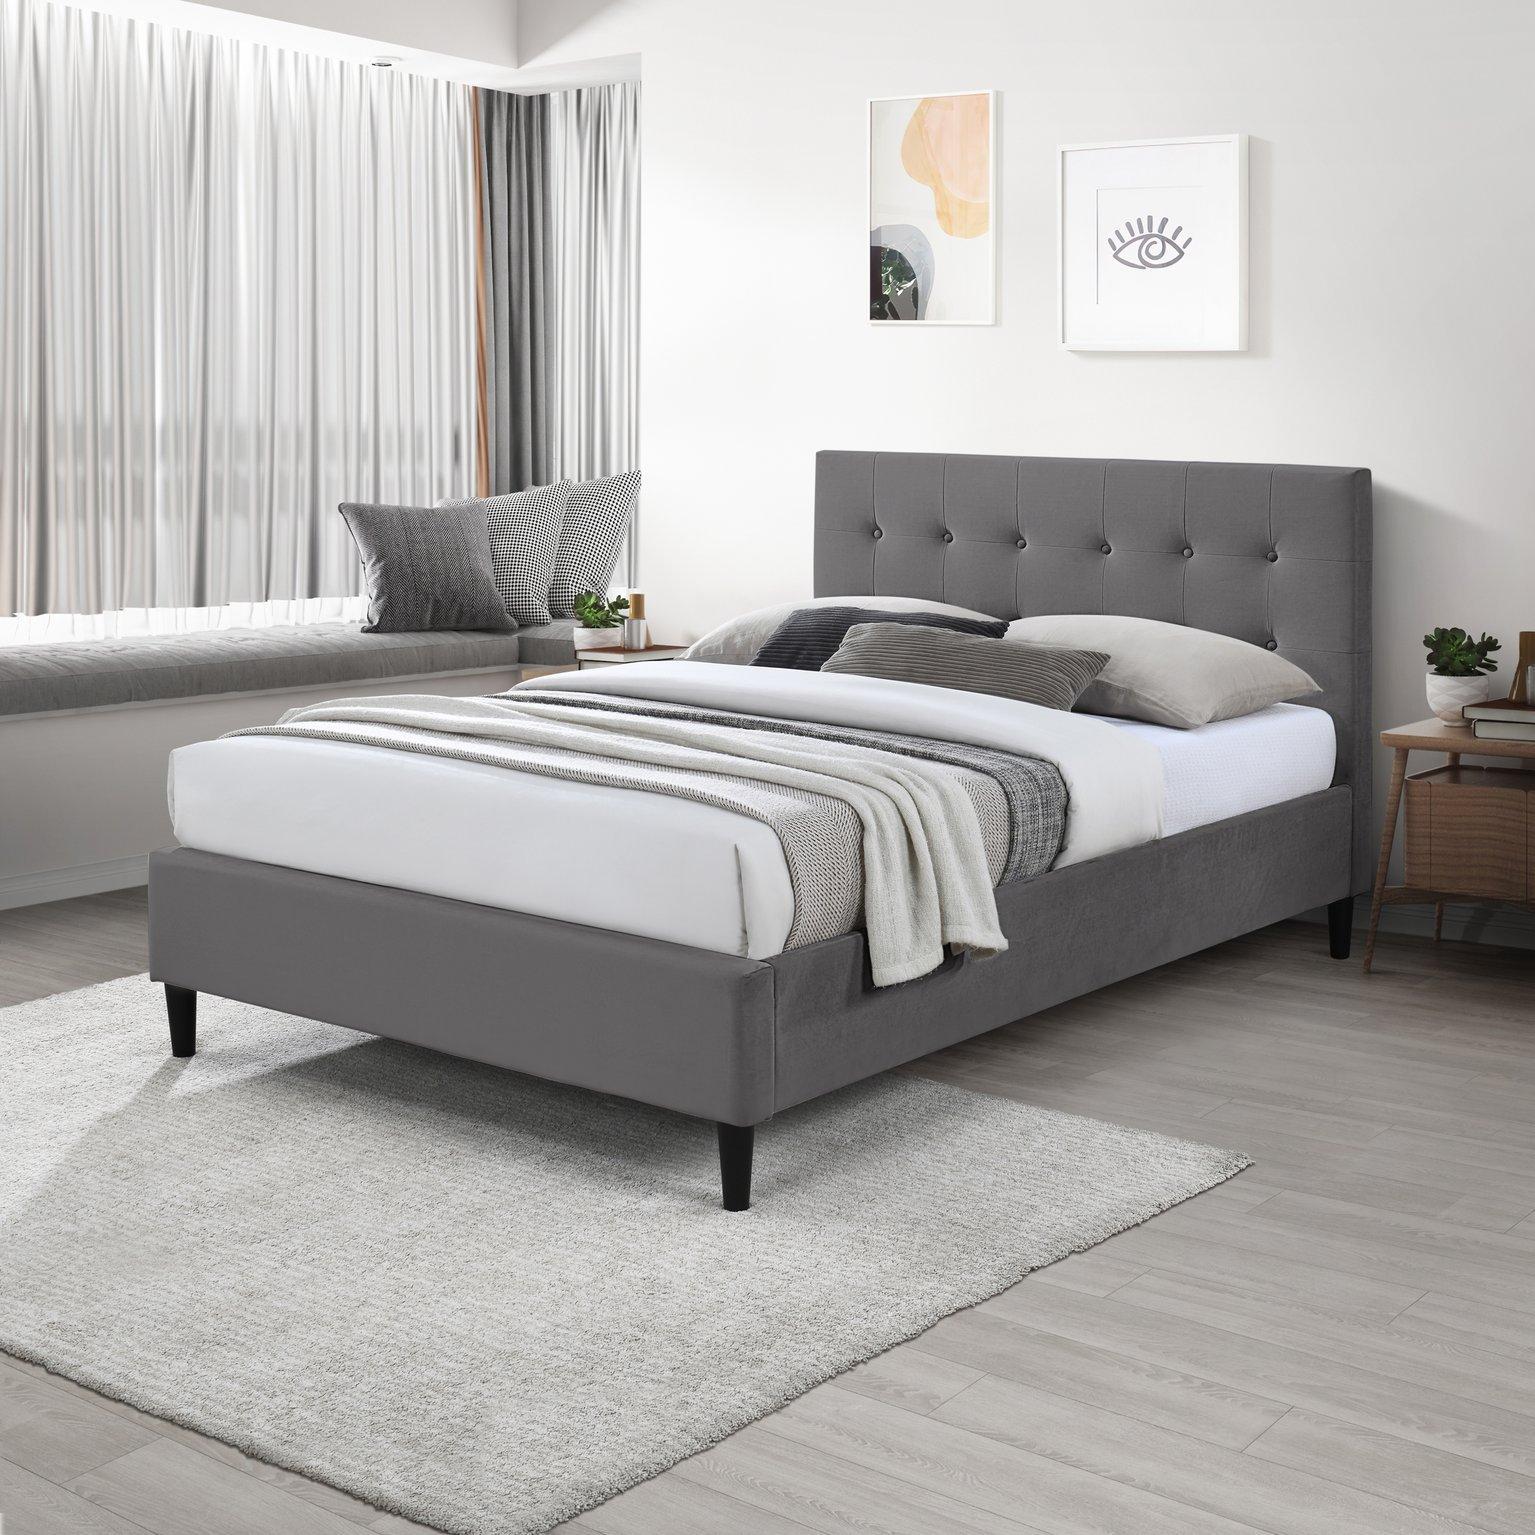 Lotus Chesterfield Style Solid Wood Bed Frame Upholstered in Velvet